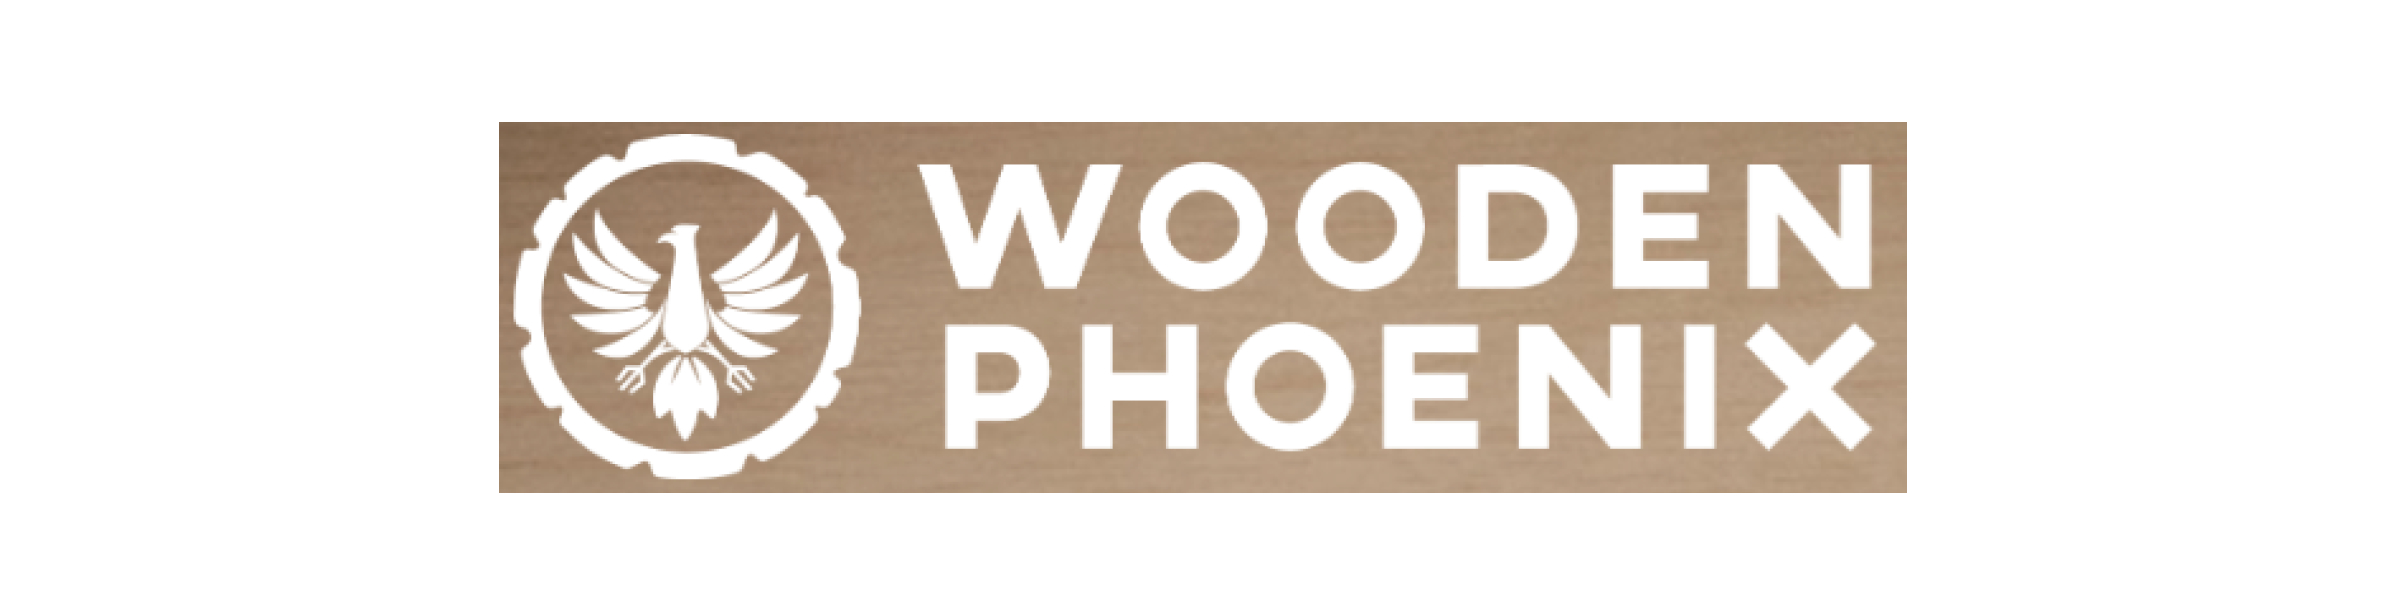 Wooden Phoenix logo